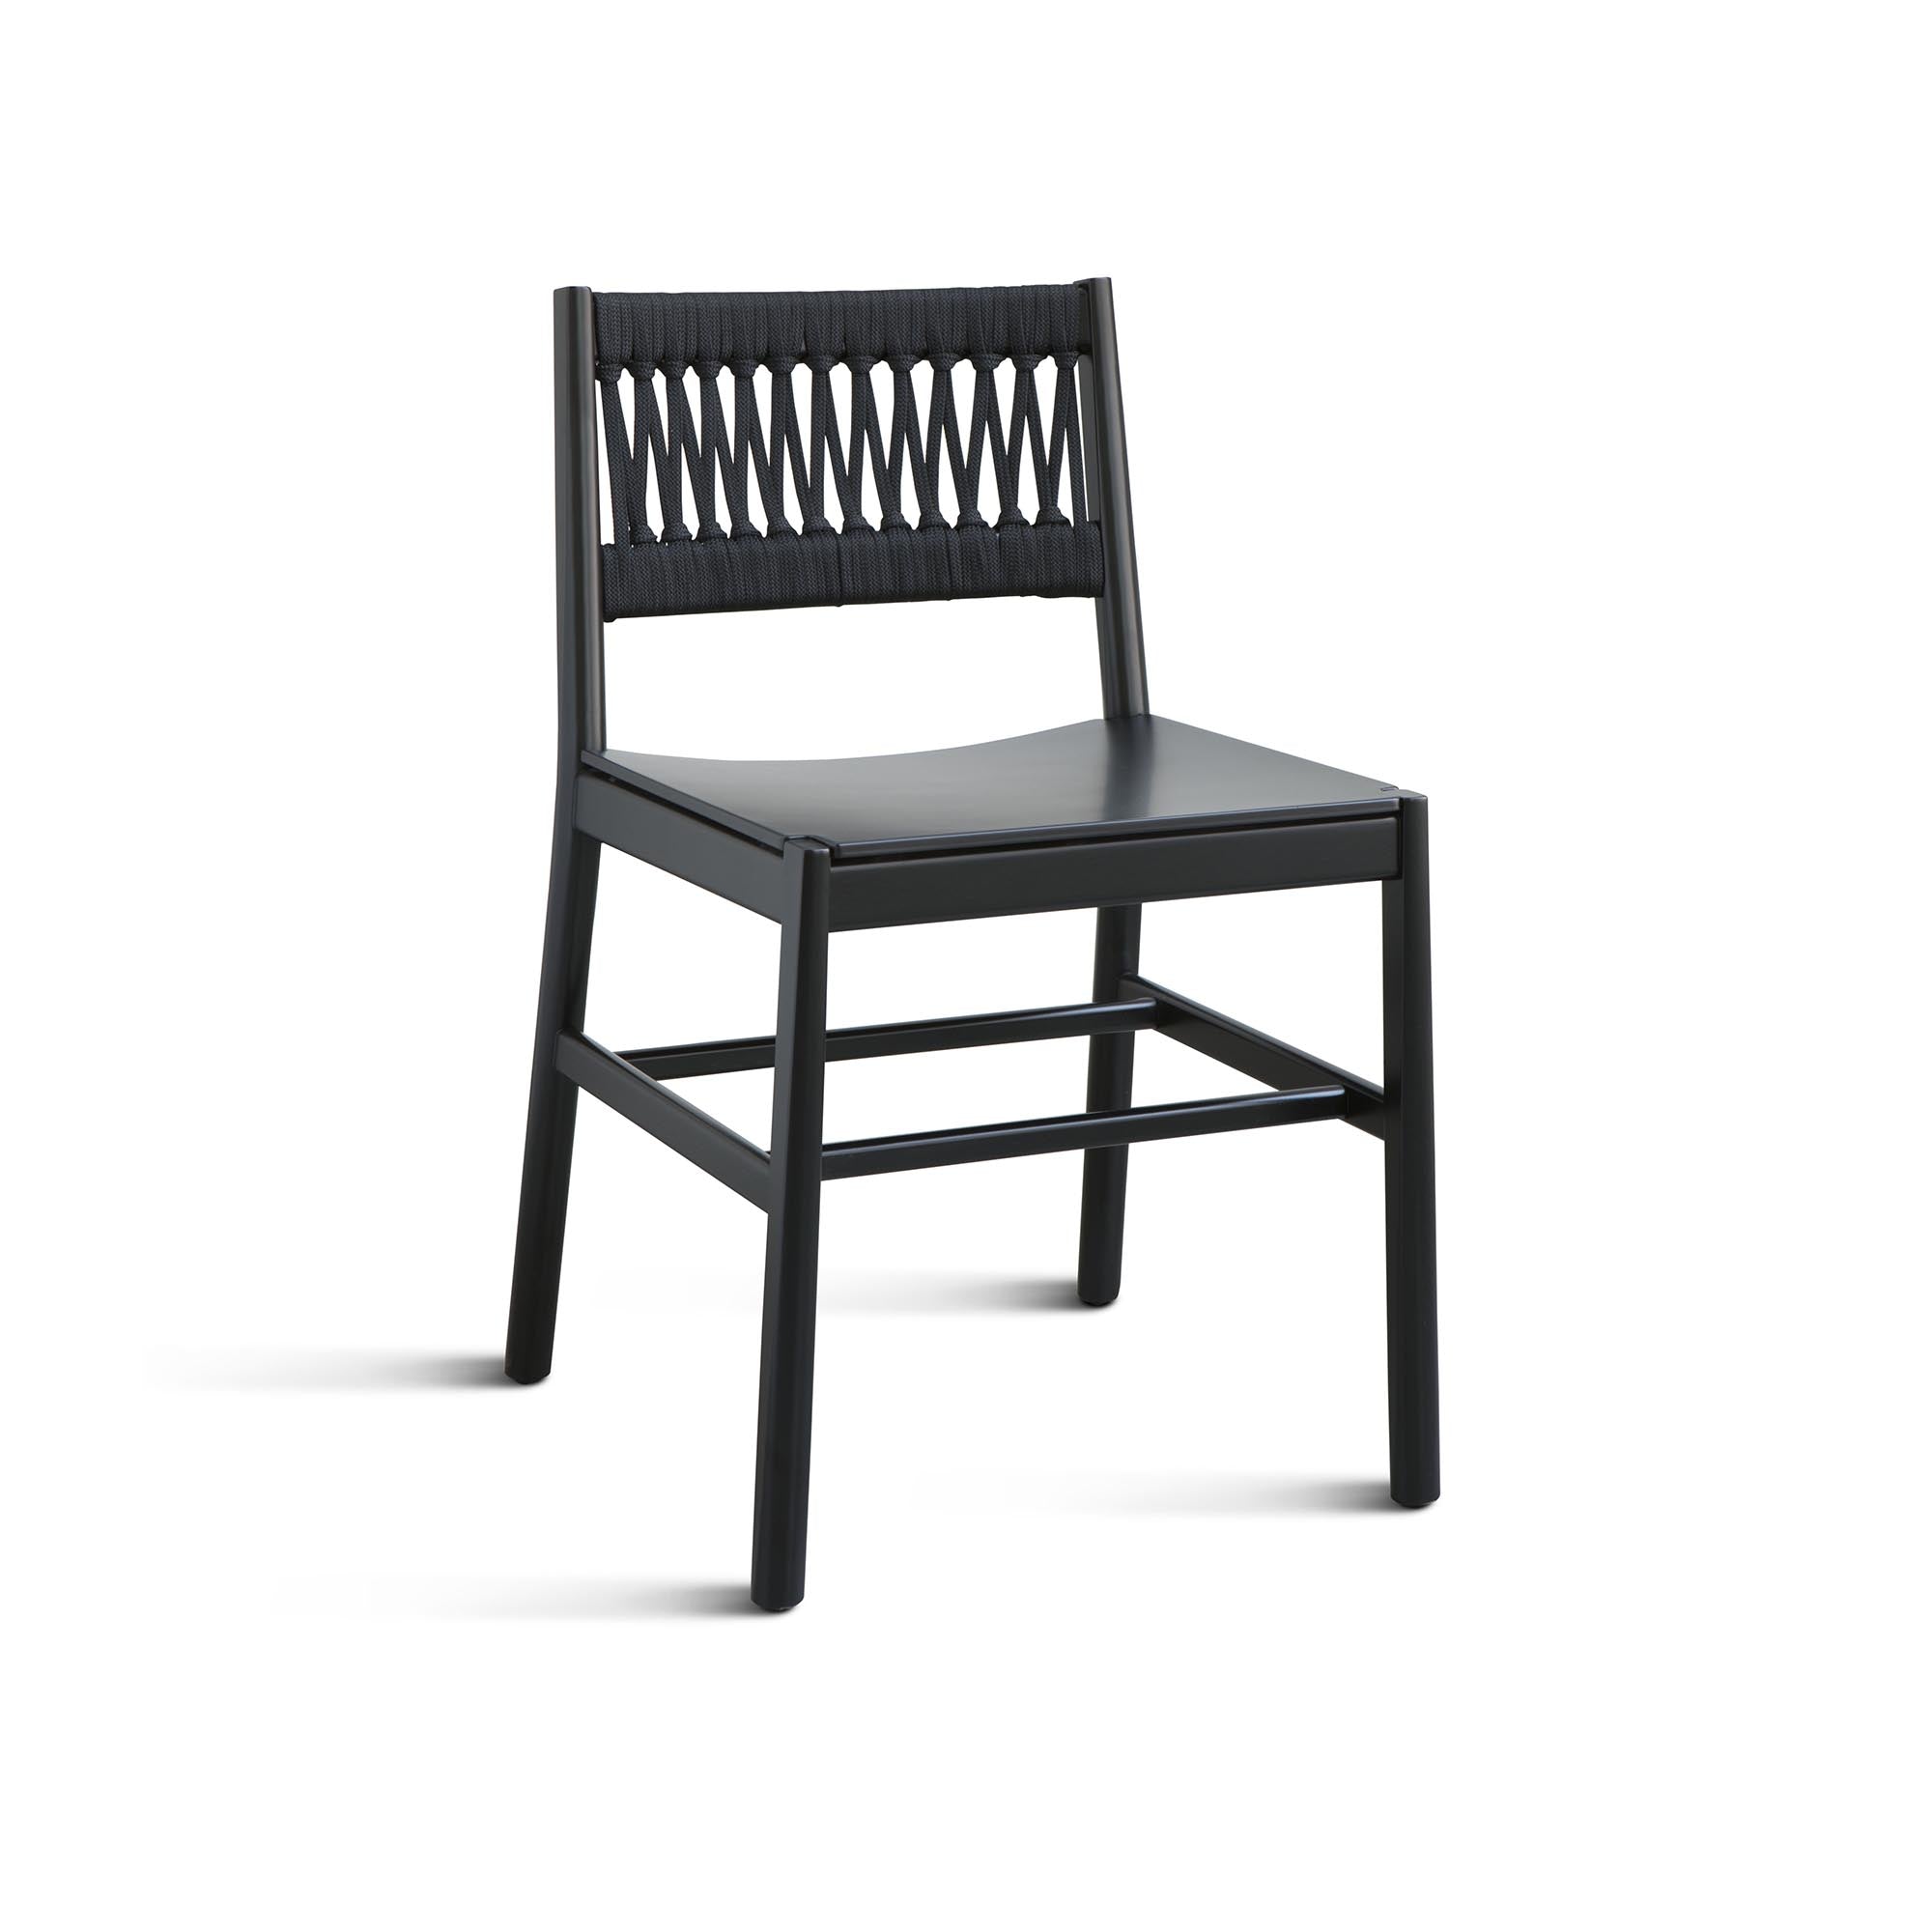 JULIE IN Chair beech frame black frame and backrest